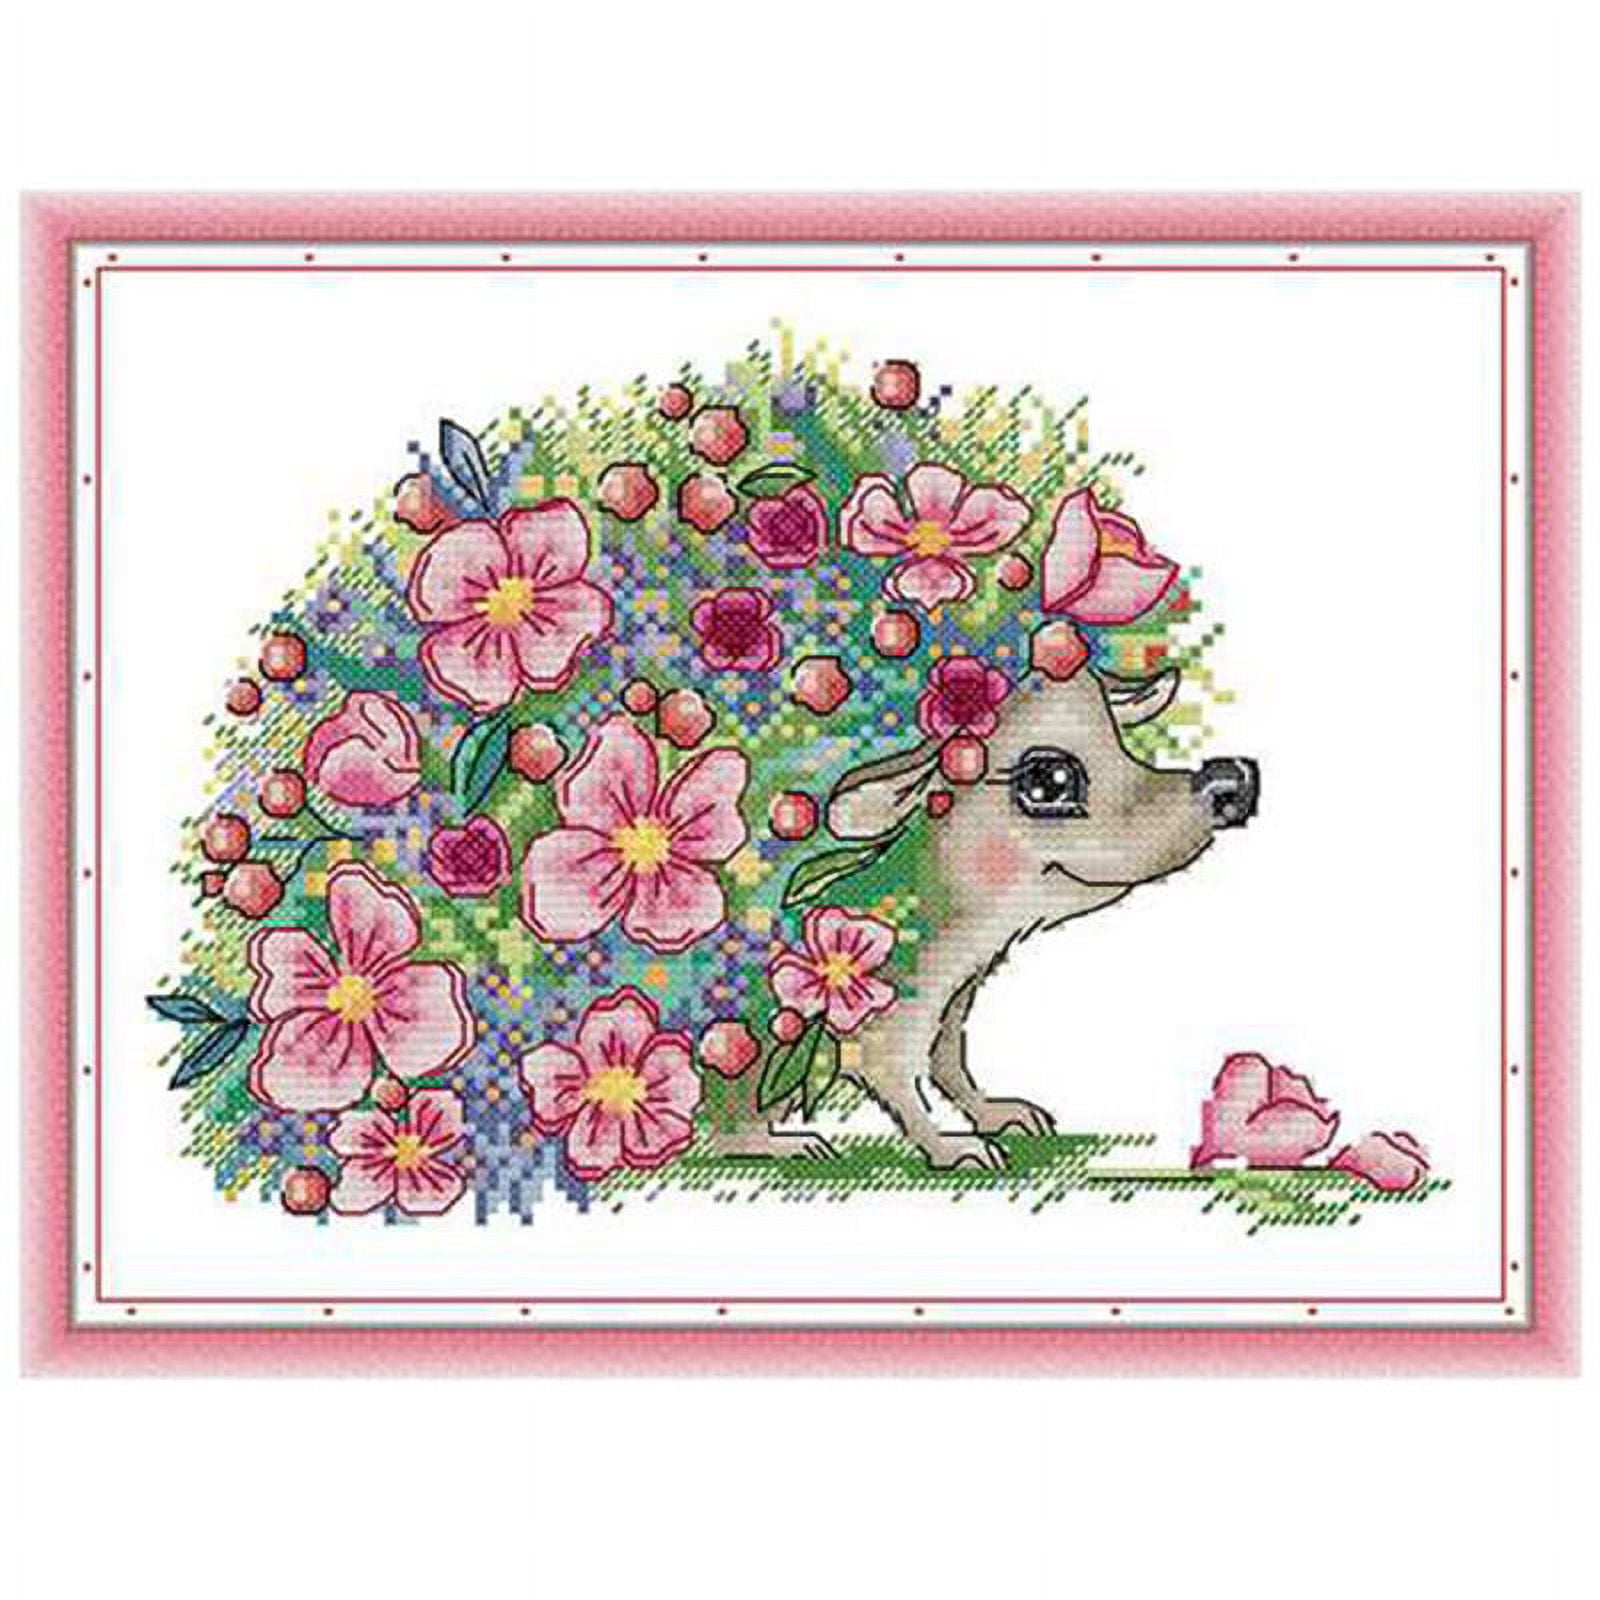 Hedgehog Printed Embroidery Set Kit